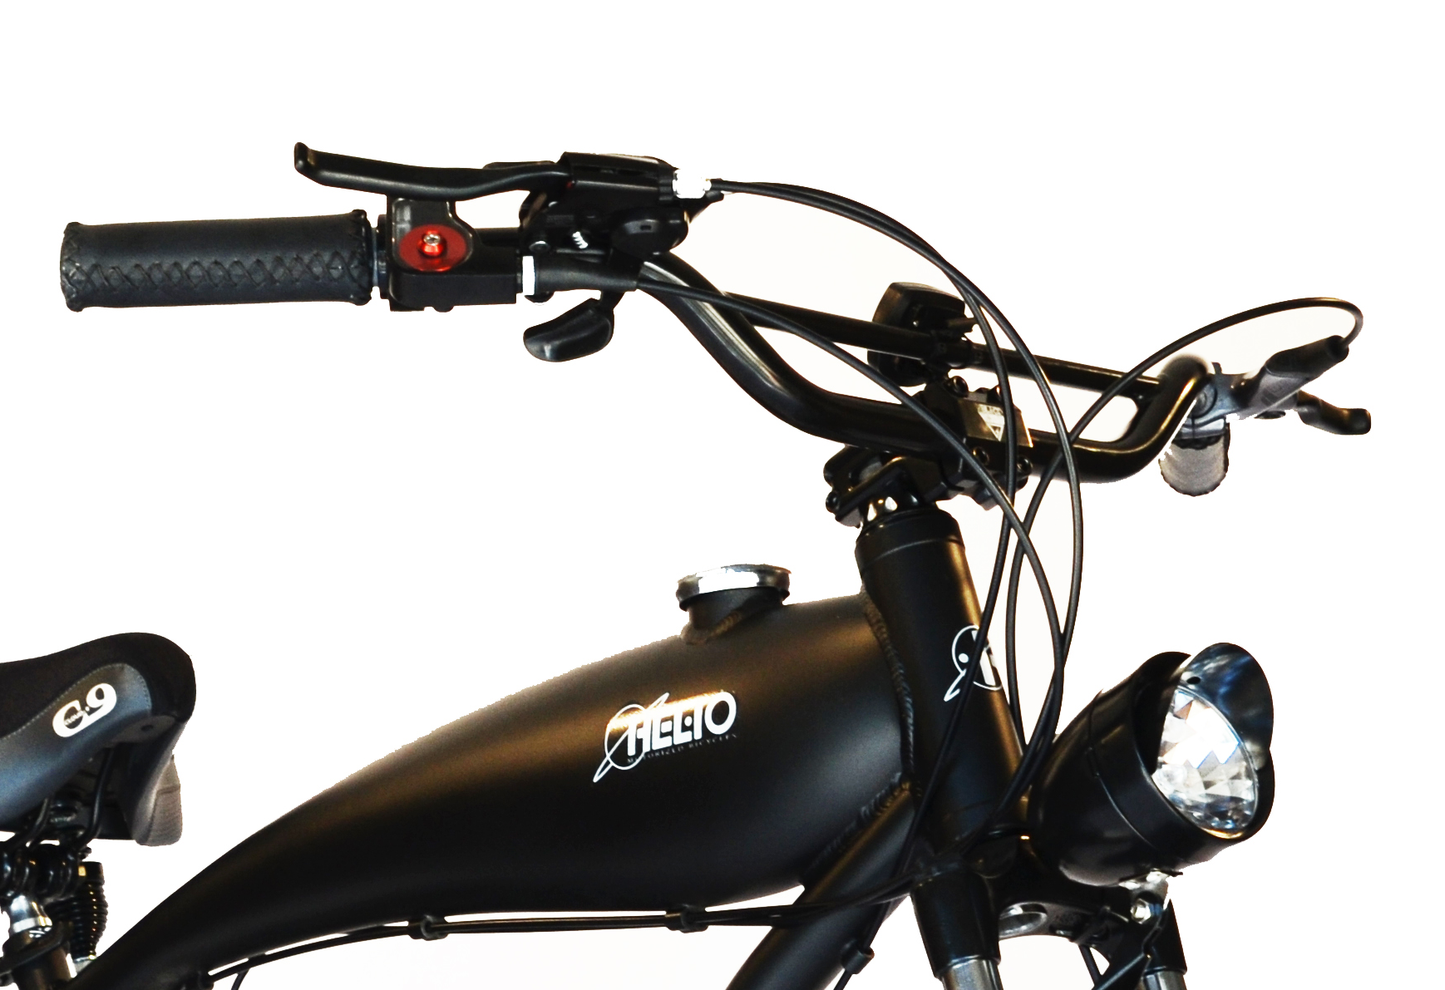 Helio Motobar and Stem Motocross style handlebar